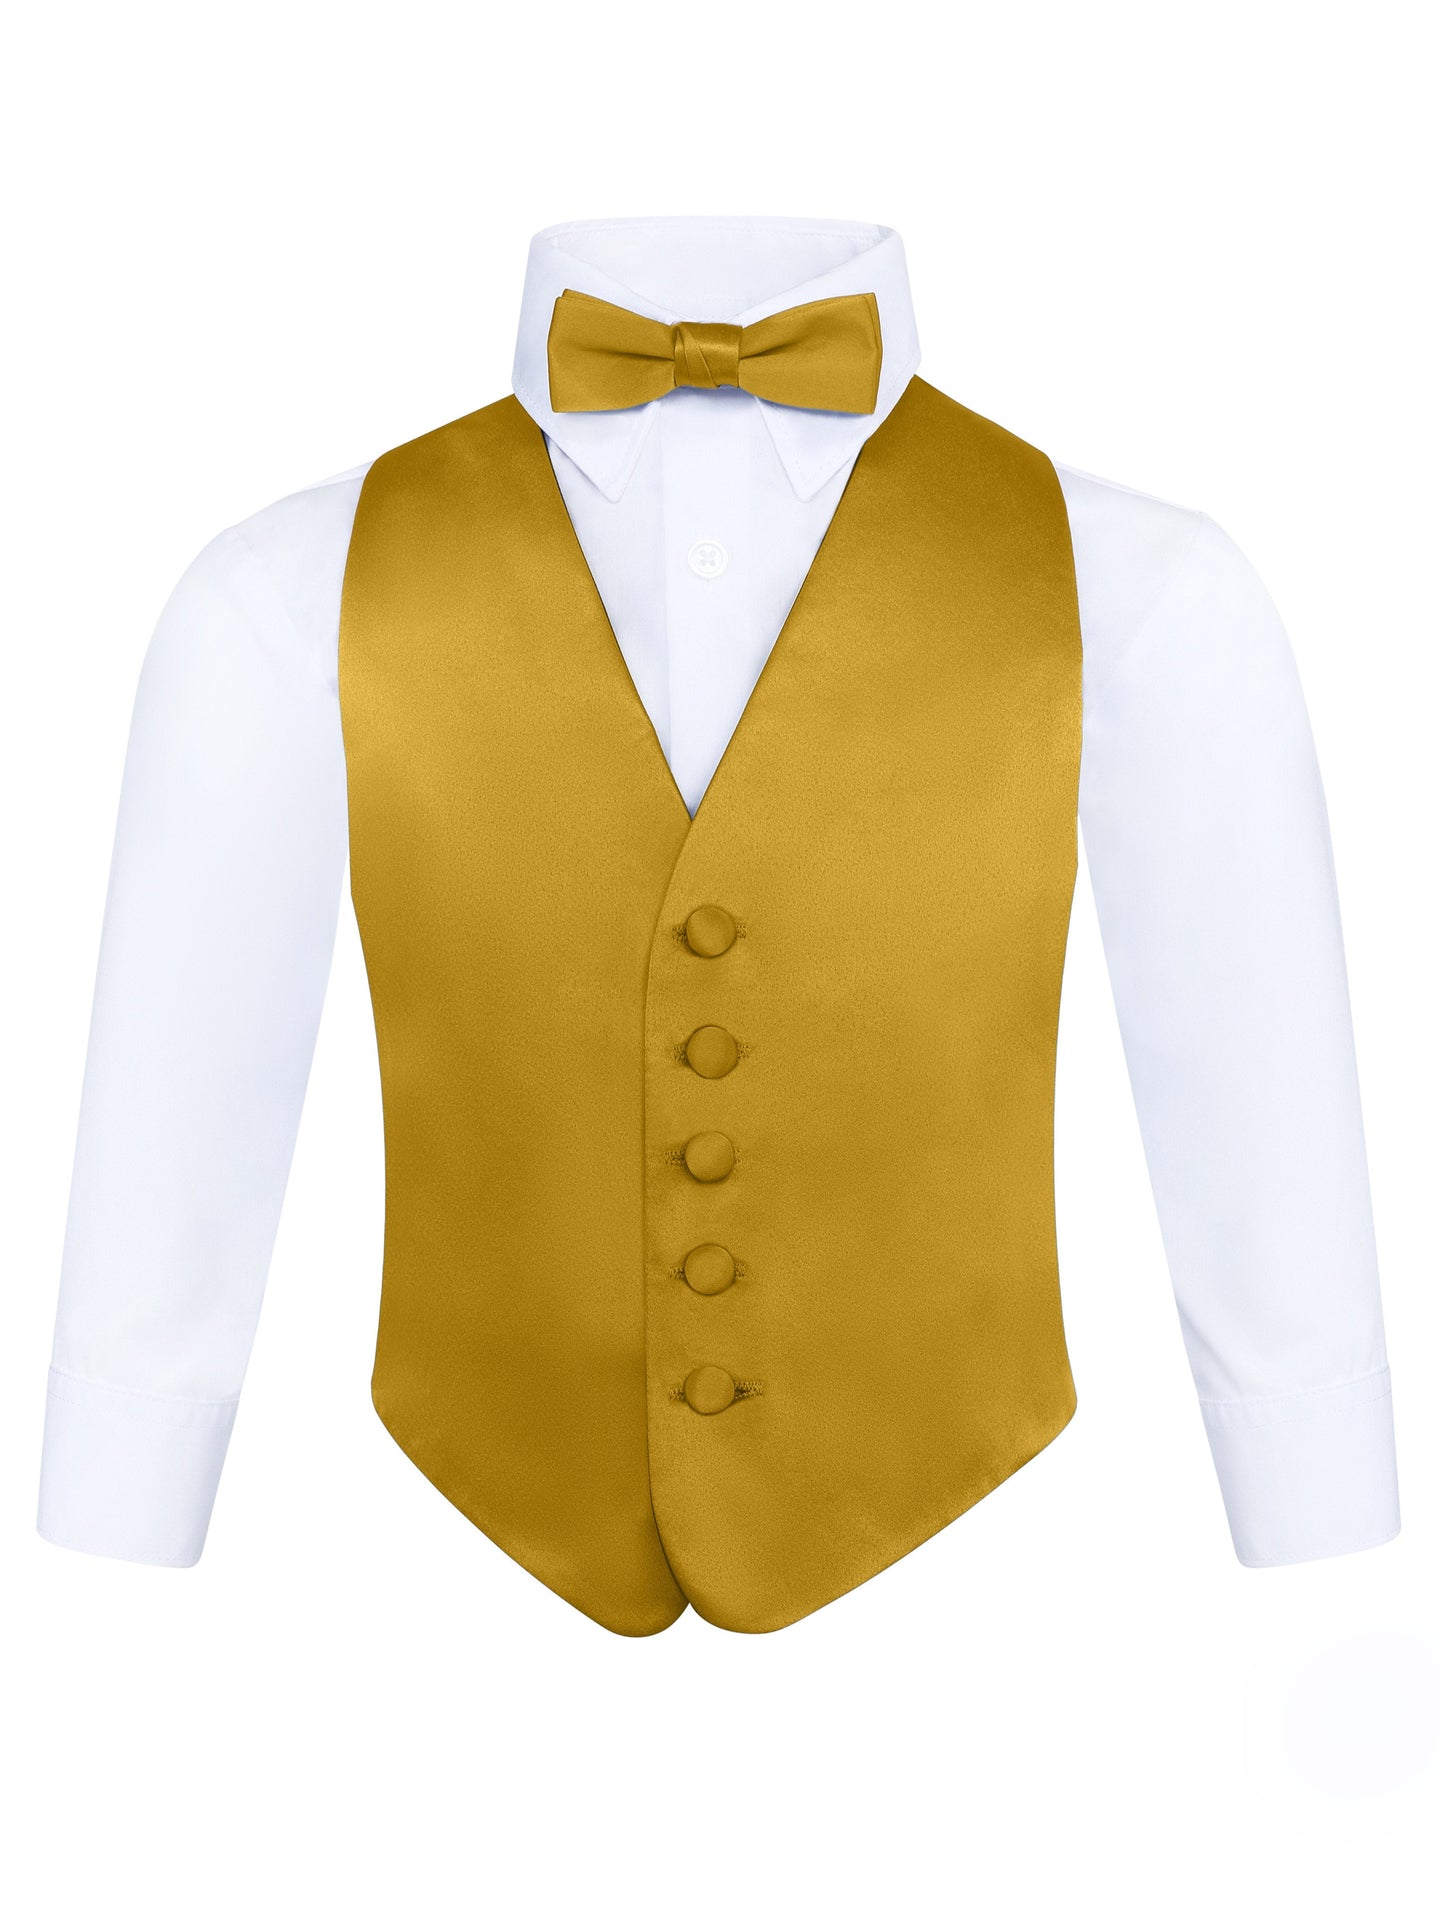 S.H. Churchill & Co. Boy's 3 Piece Gold Backless Formal Vest Set - Includes Vest, Bow Tie, Pocket Square for Tuxedo or Suit